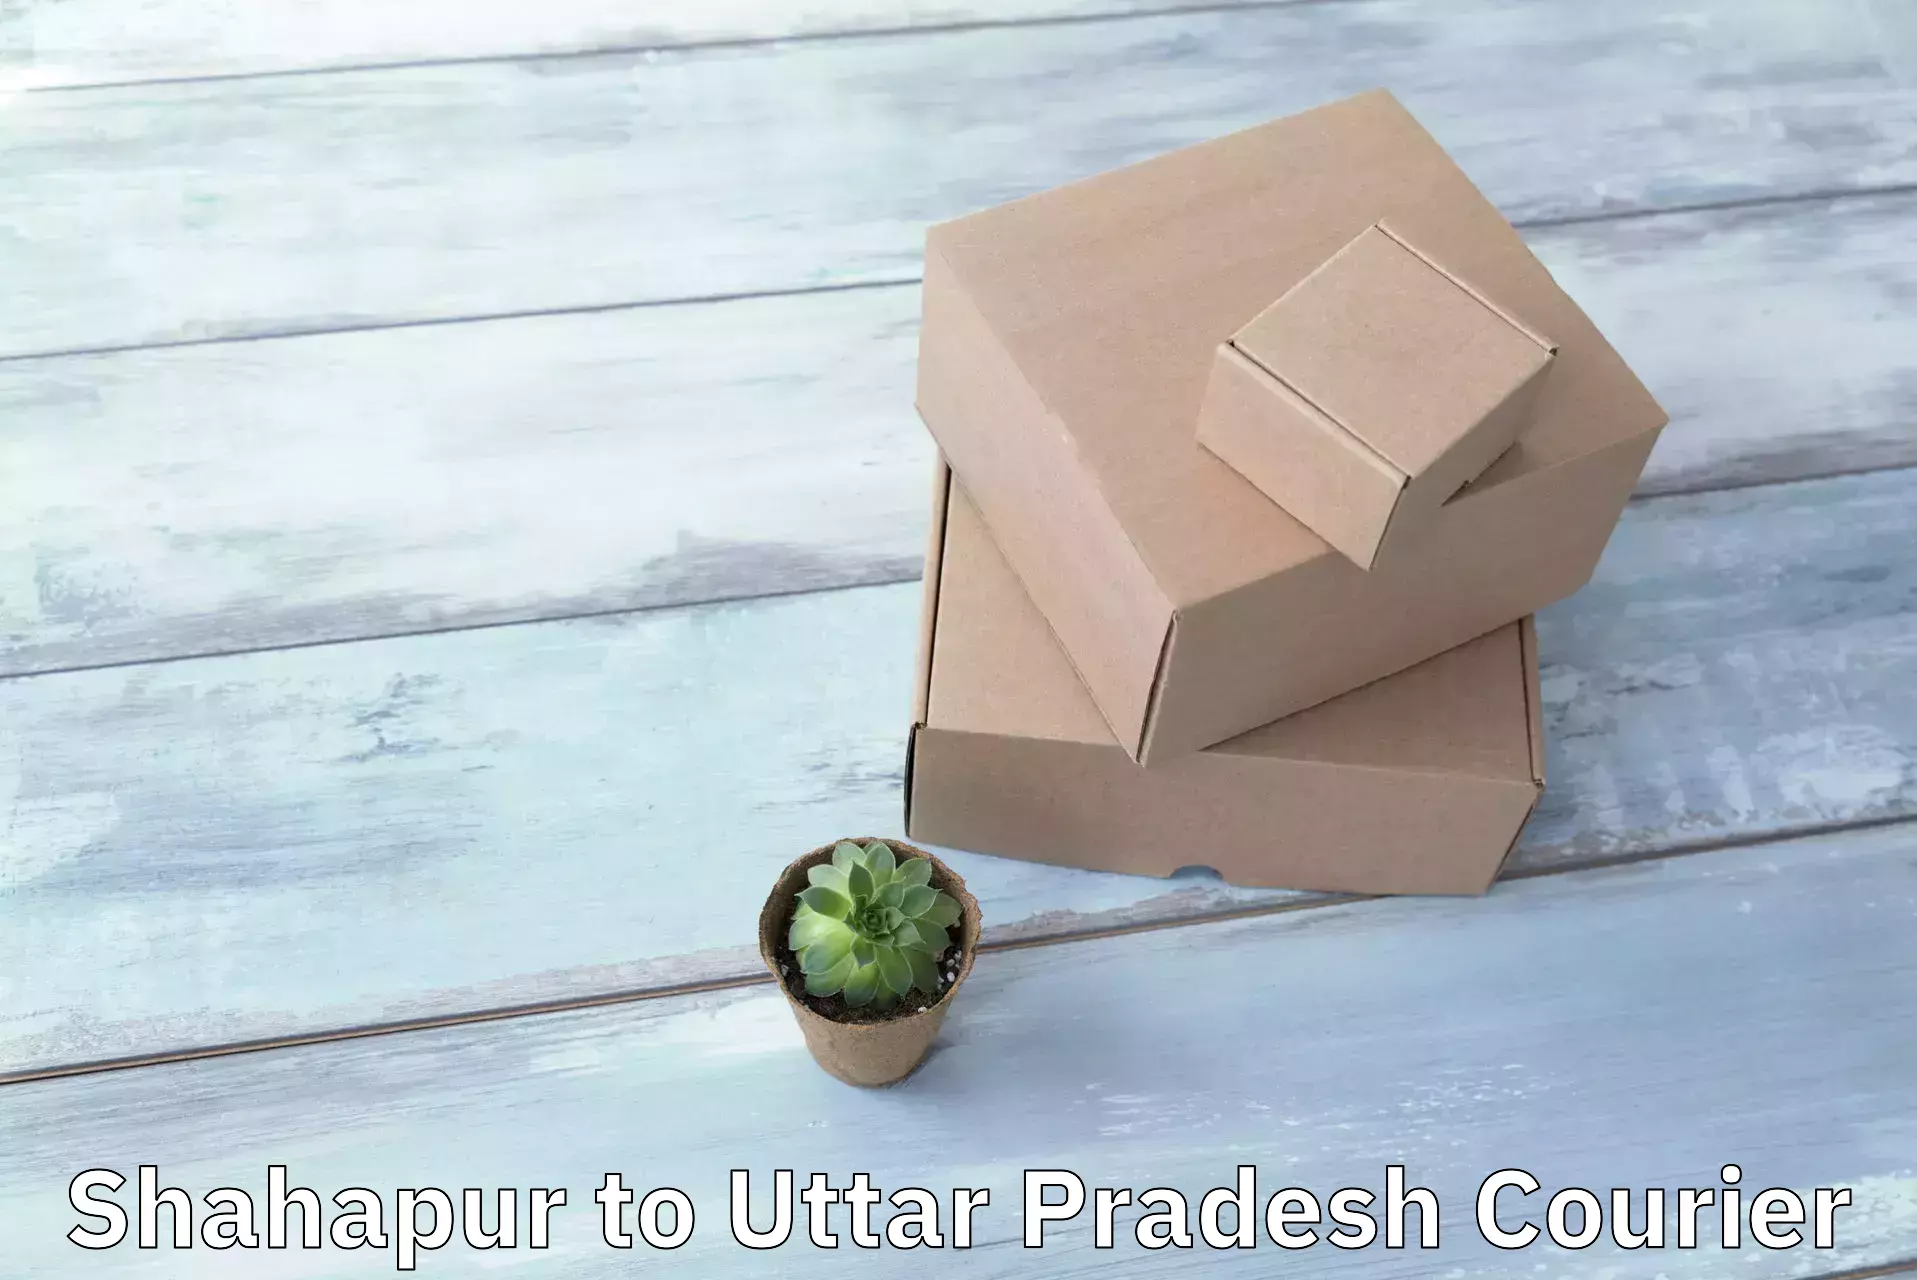 Pharmaceutical courier Shahapur to Uttar Pradesh